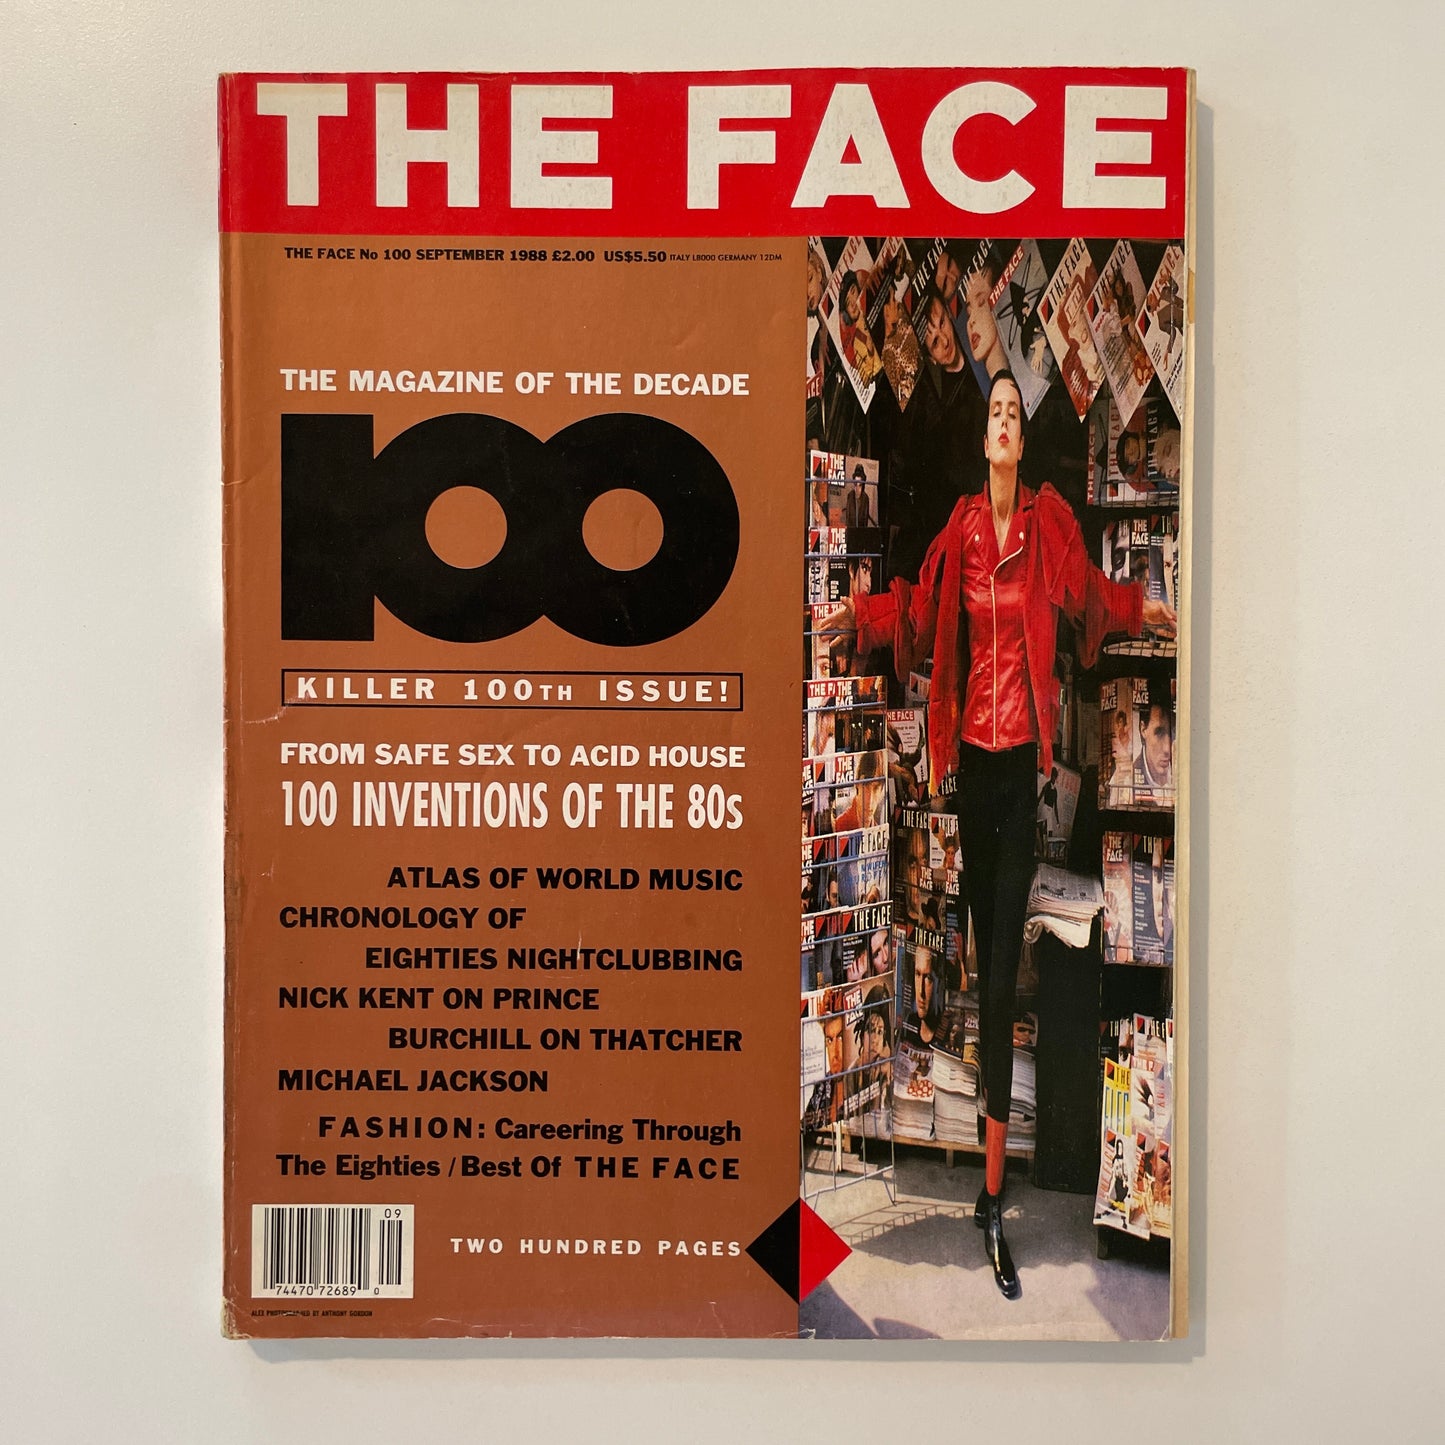 The Face No.100 - September 1988